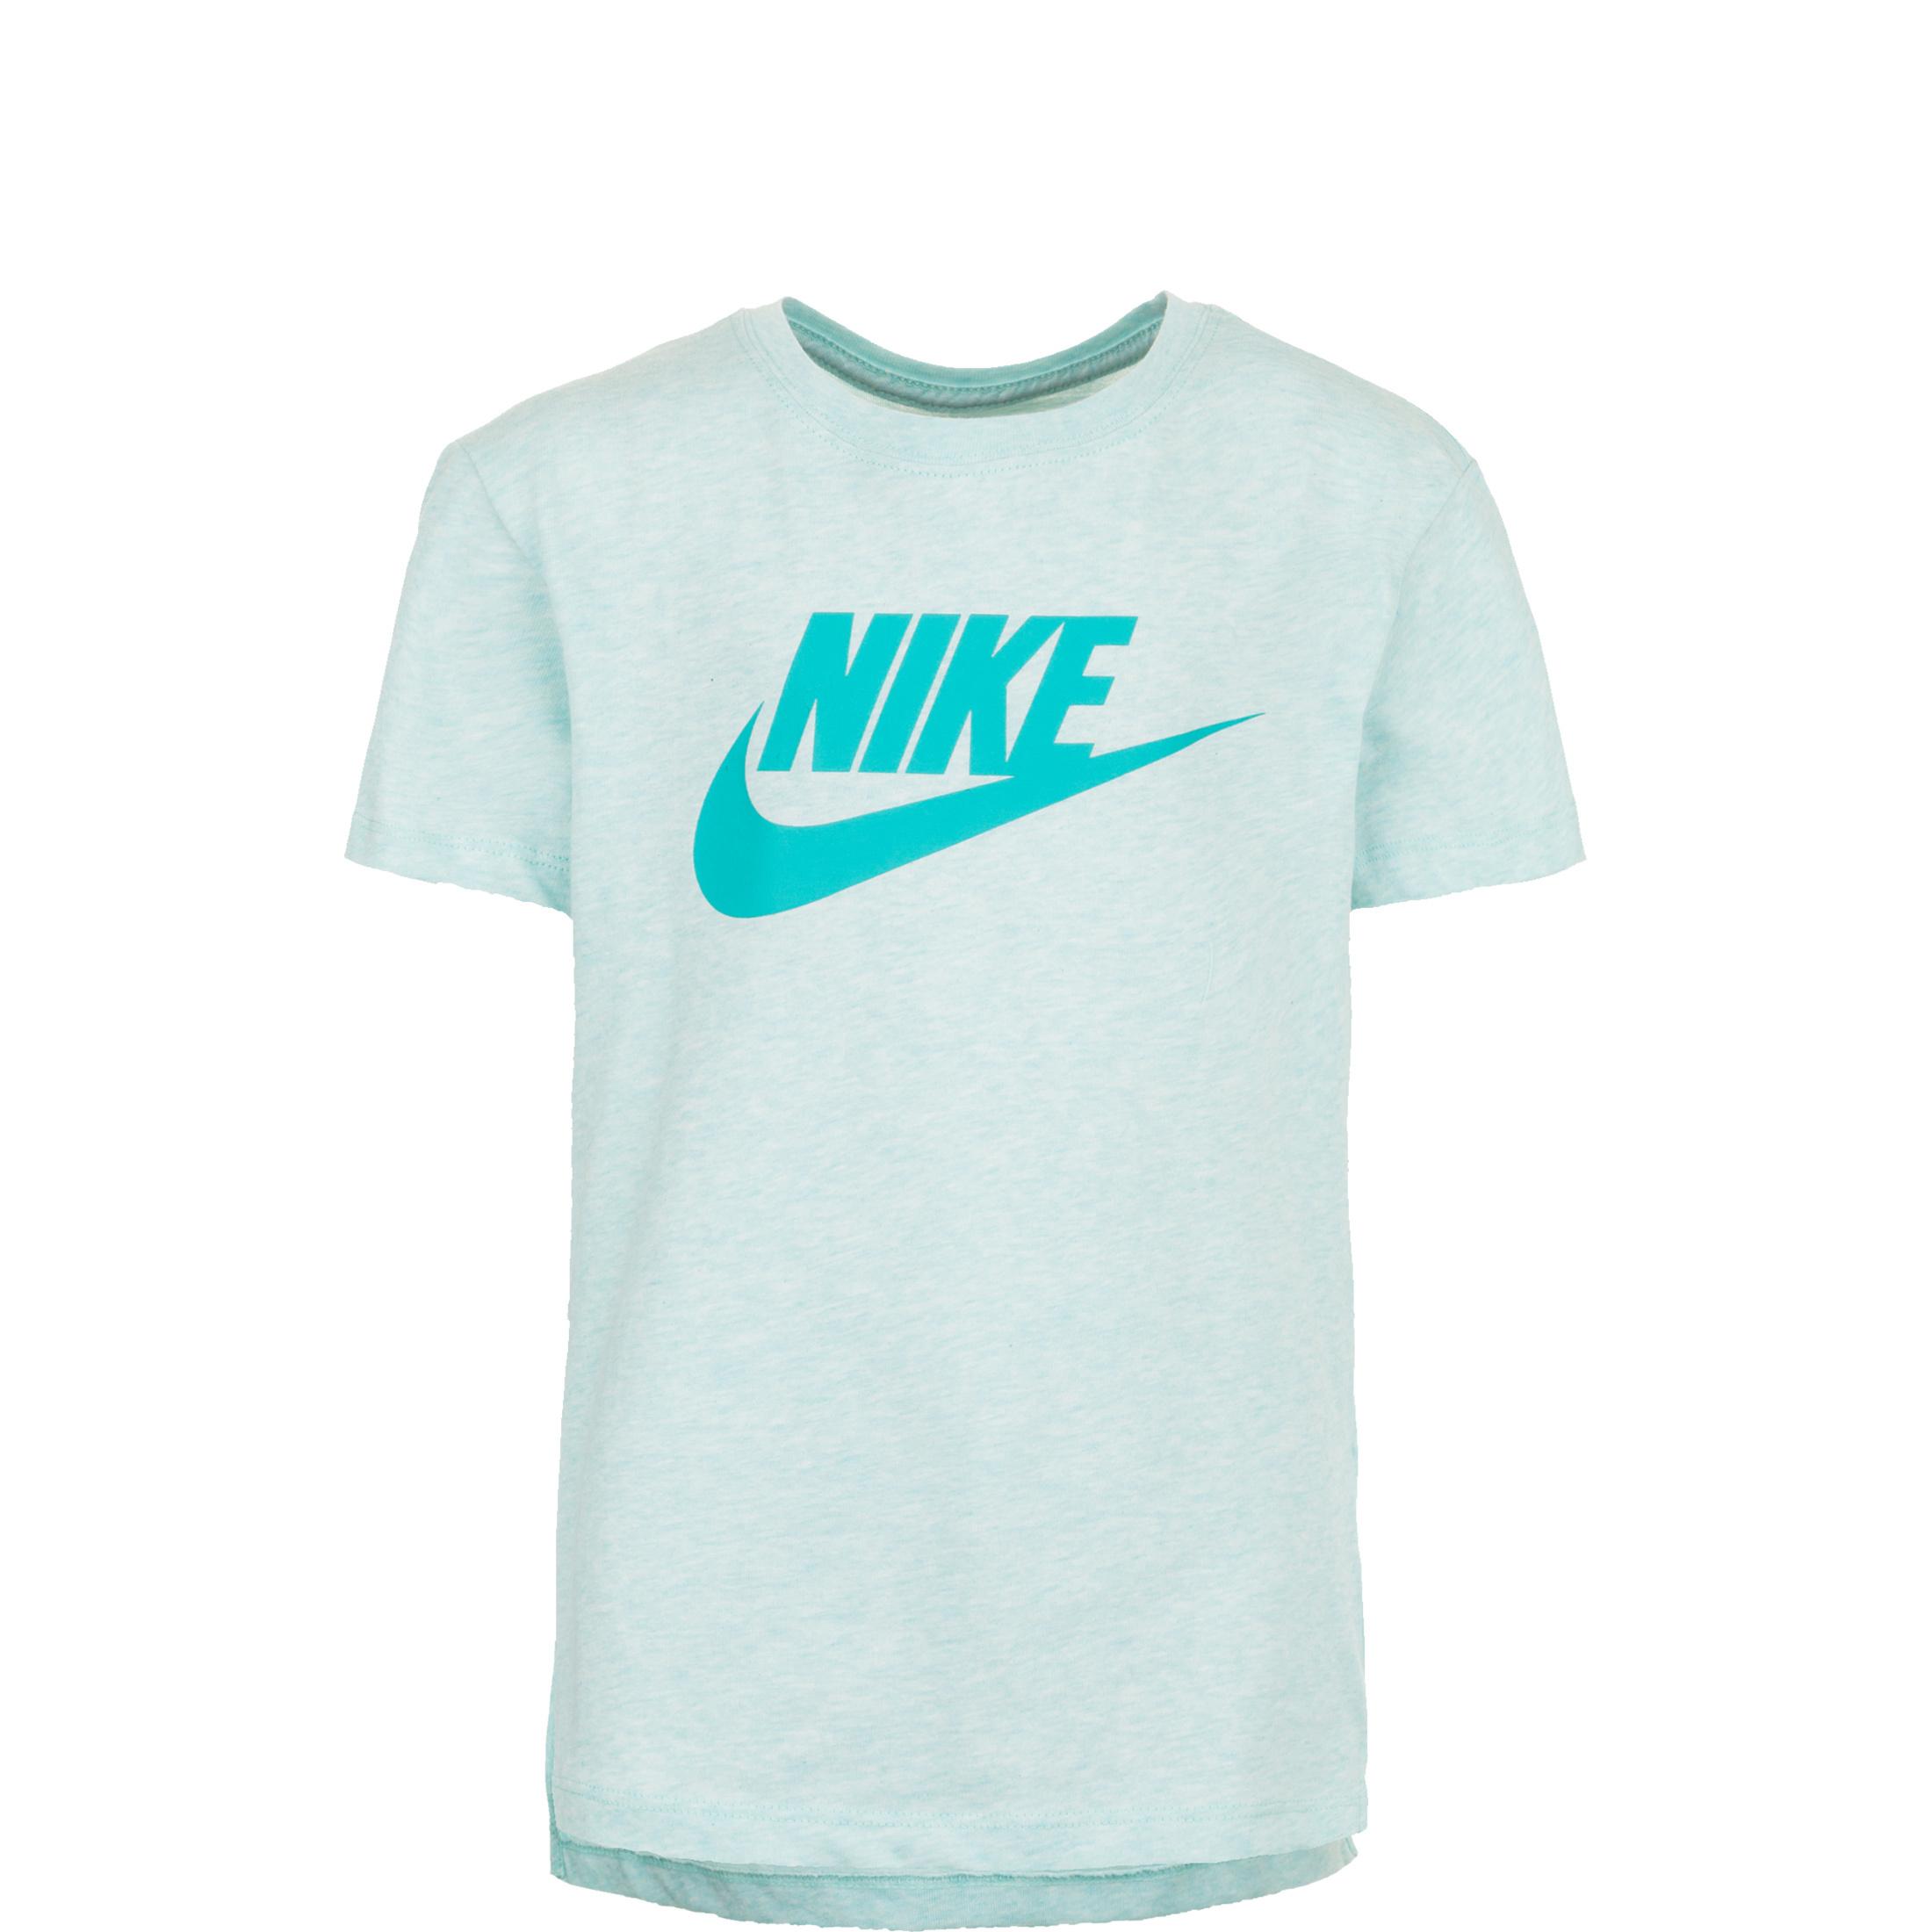 Nike Basic Futura T-Shirt Mädchen mint 